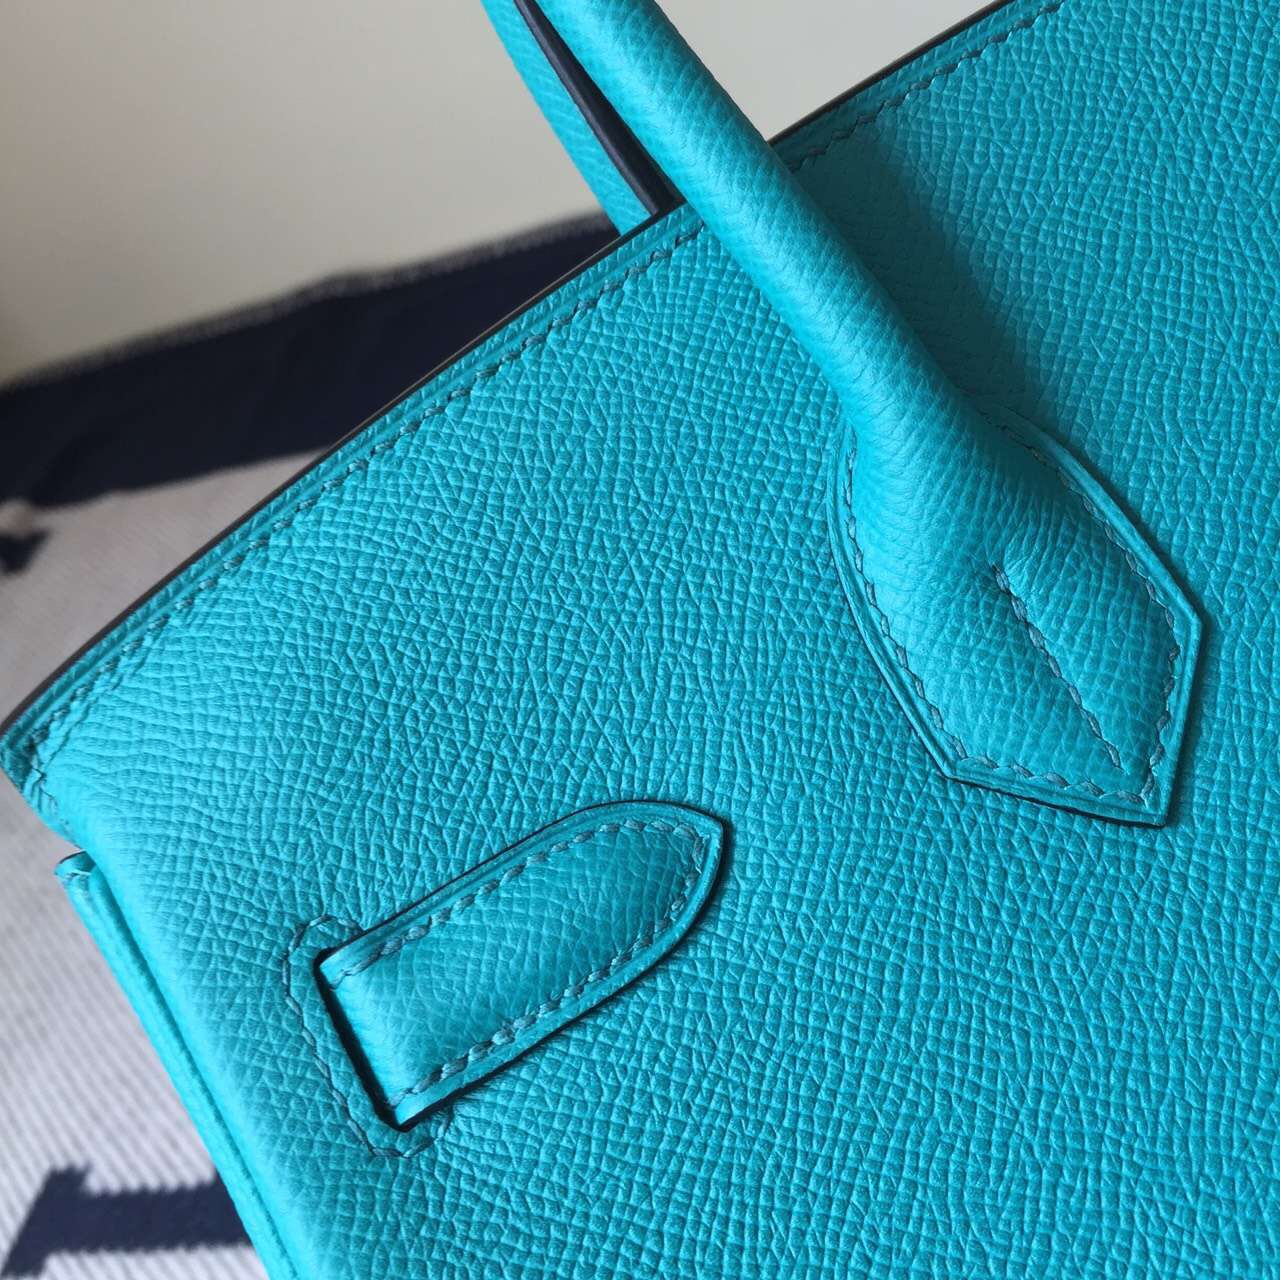 Discount Hermes Epsom Leather Birkin Bag 30cm in Peacock Blue